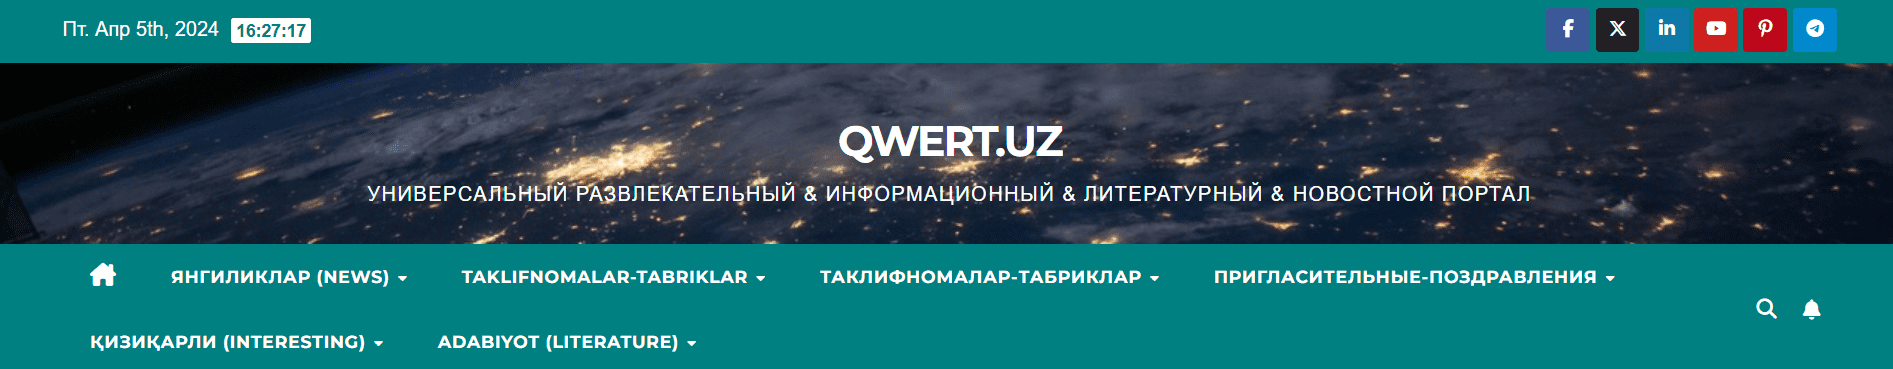 Qwert.uz - официальный сайт